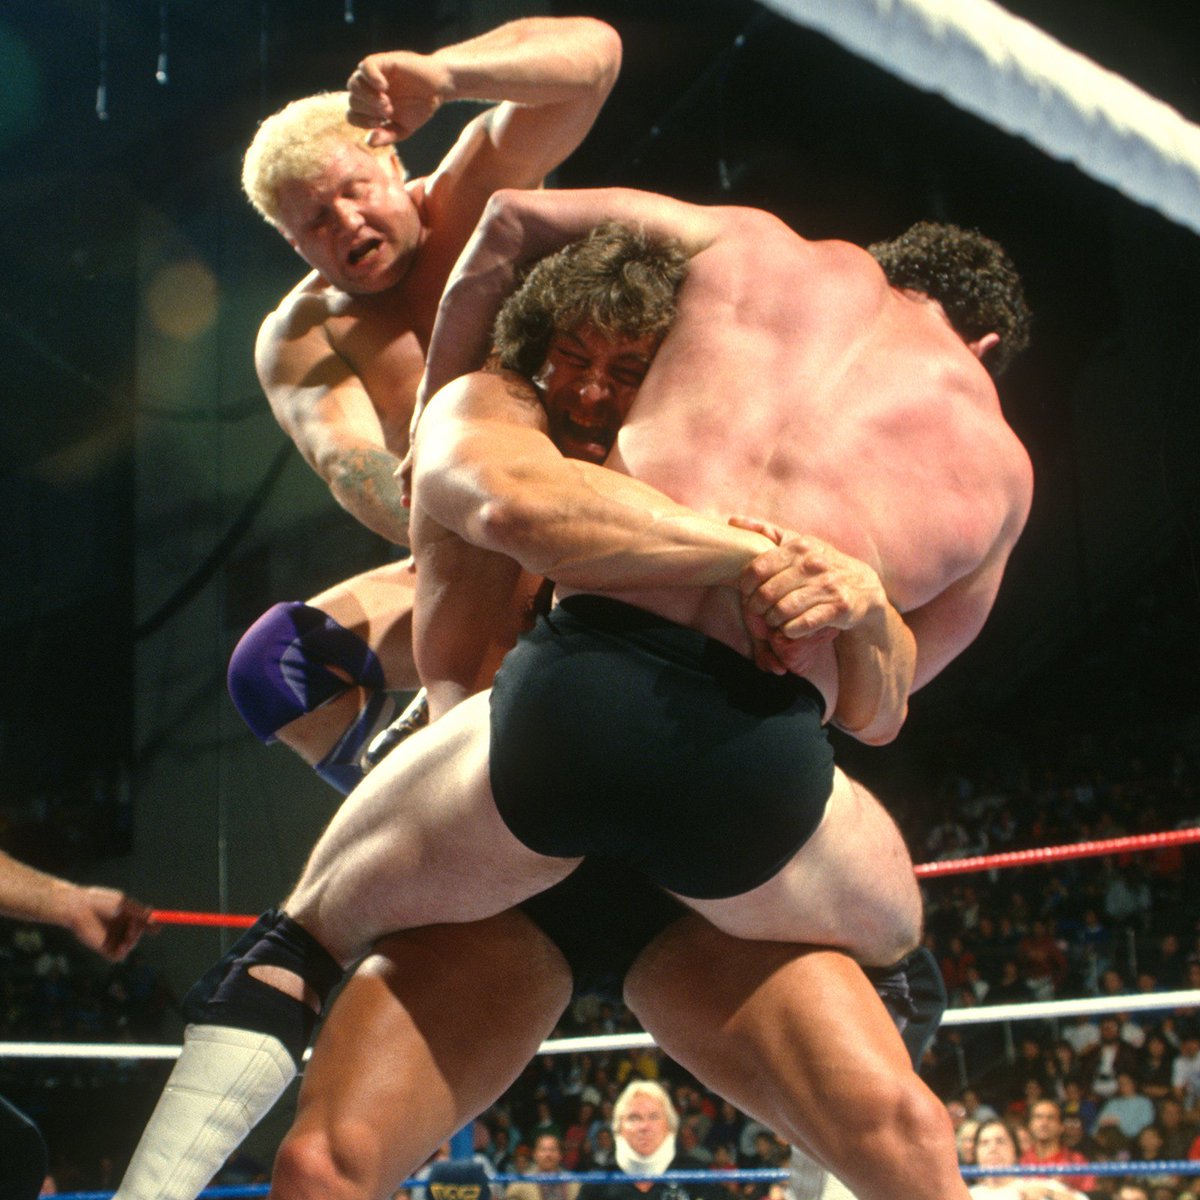 📸 WWF Action Shot! #WWF #WWE #Wrestling #HarleyRace #KenPatera #Hercules